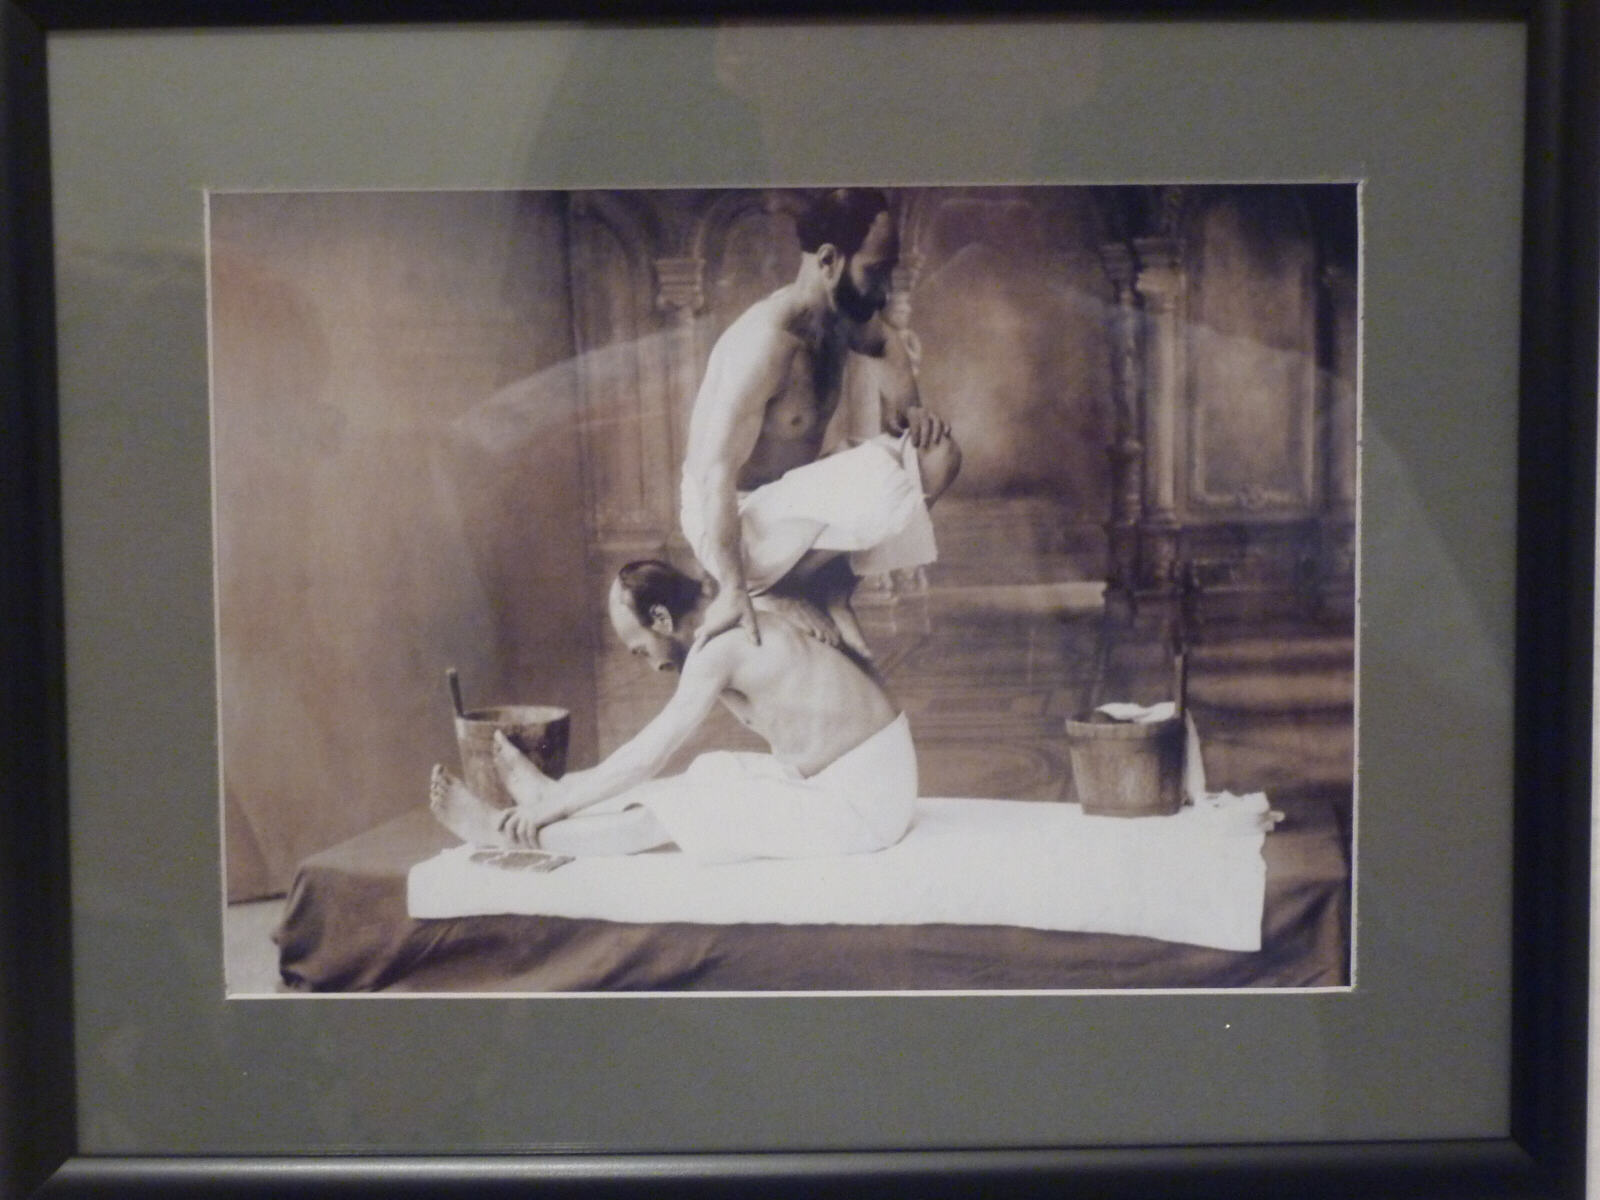 Picture of vigorous massage in the Ponto Hotel, Tblisi, Georgia